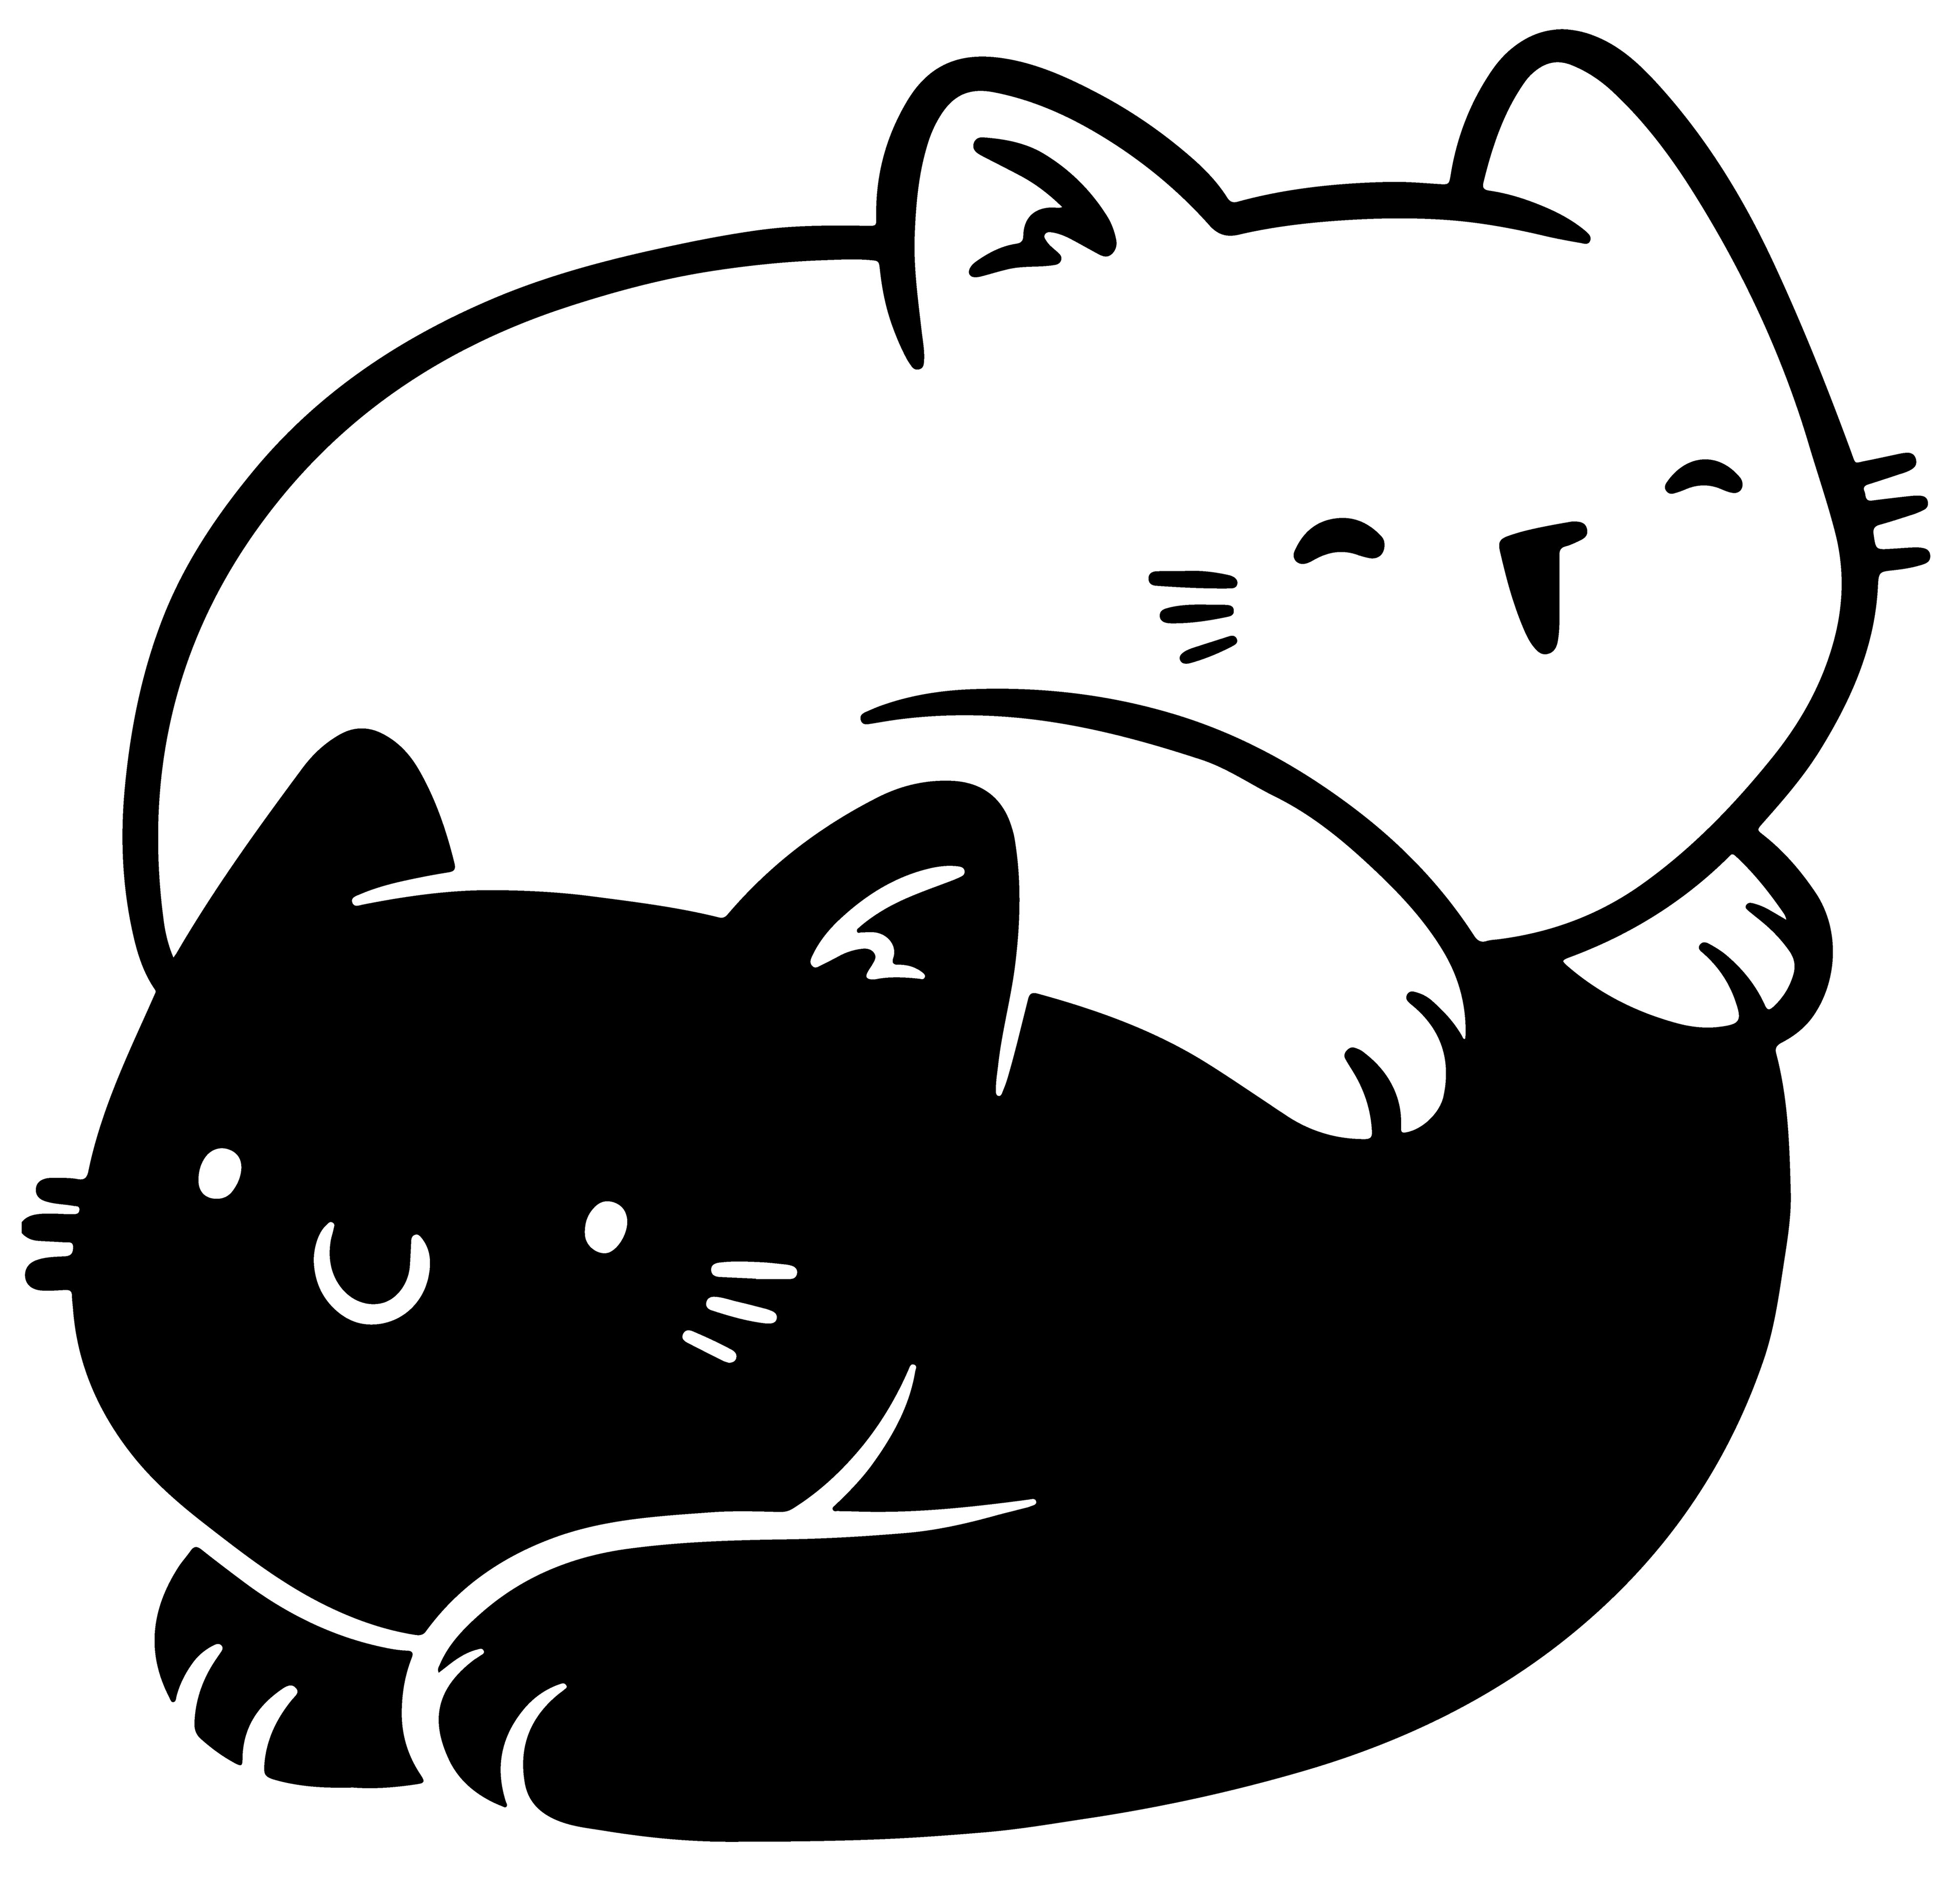 mit Sweatshirt schwarz, mit Katzen Hoodie Yang Yin MyDesign24 i112 Aufdruck, Kapuze Kinder Kapuzensweater -